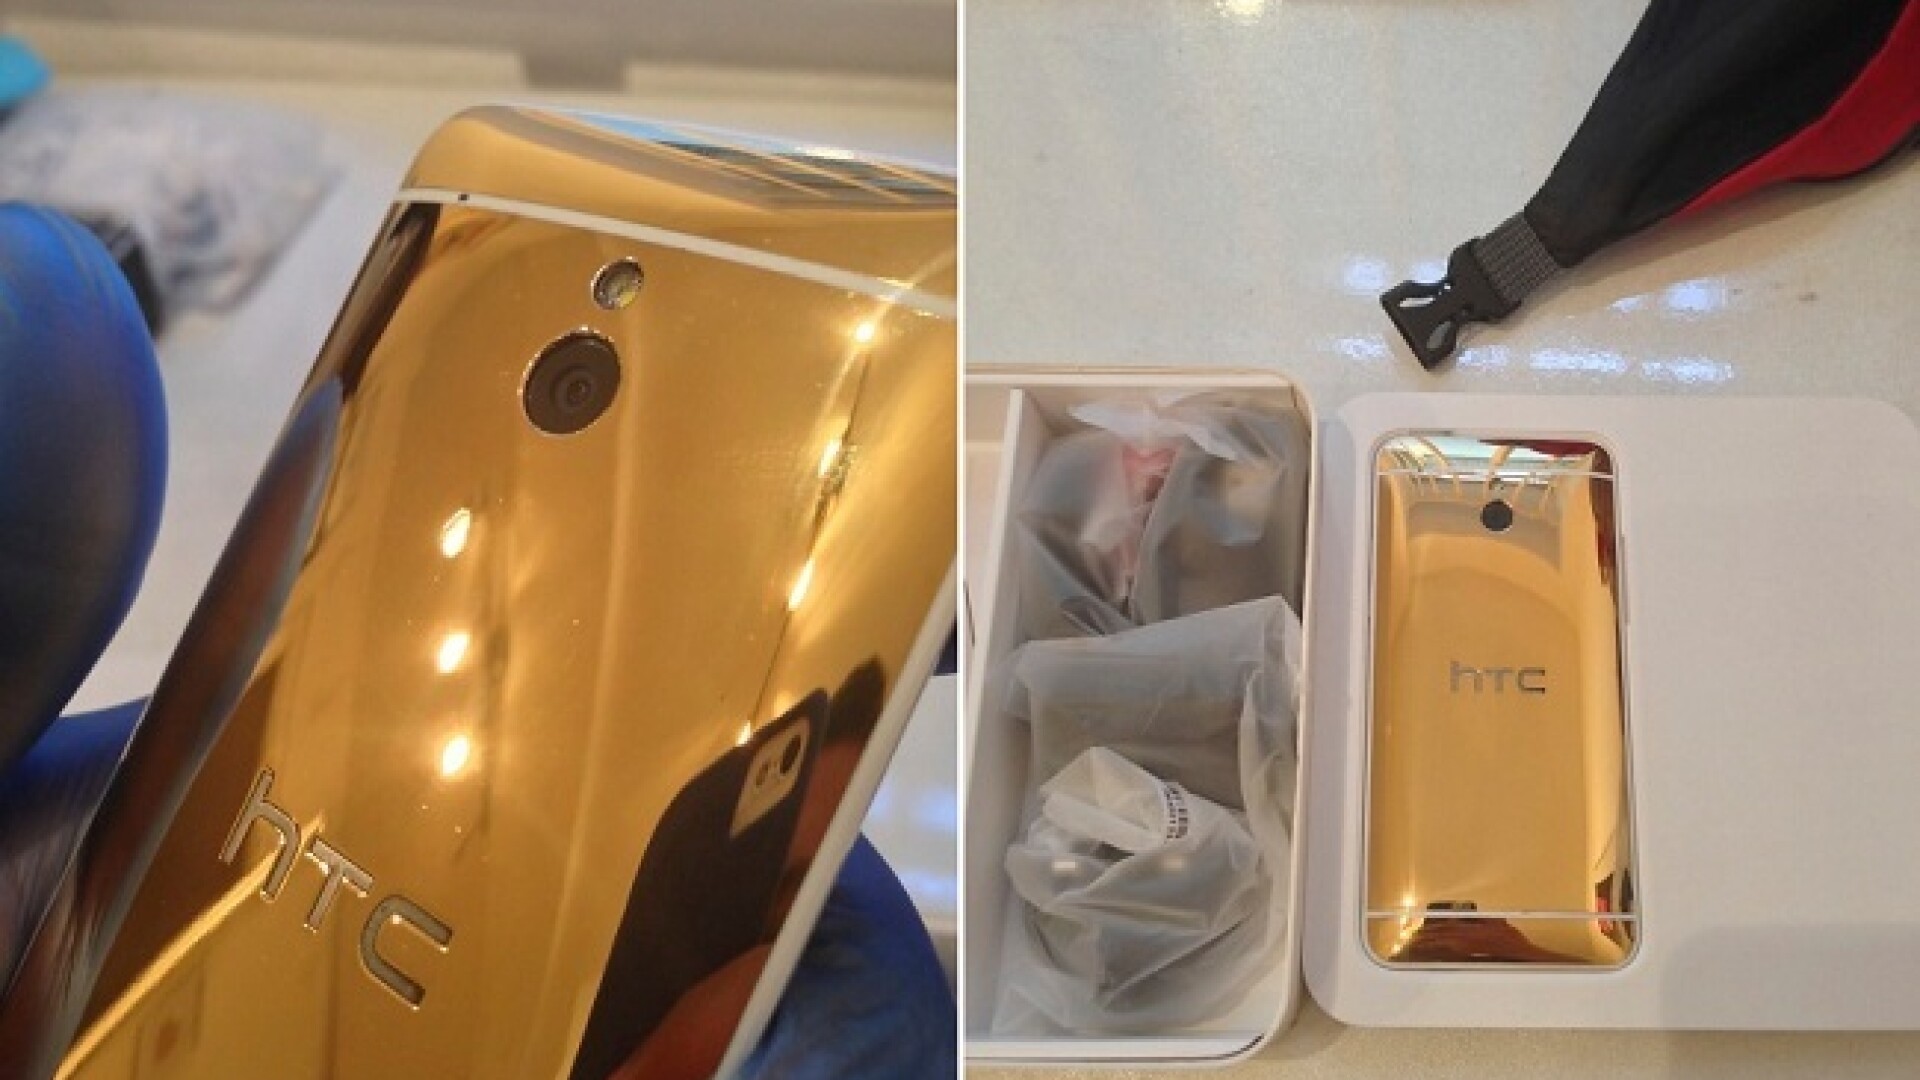 HTC One Mini Gold Edition - 2